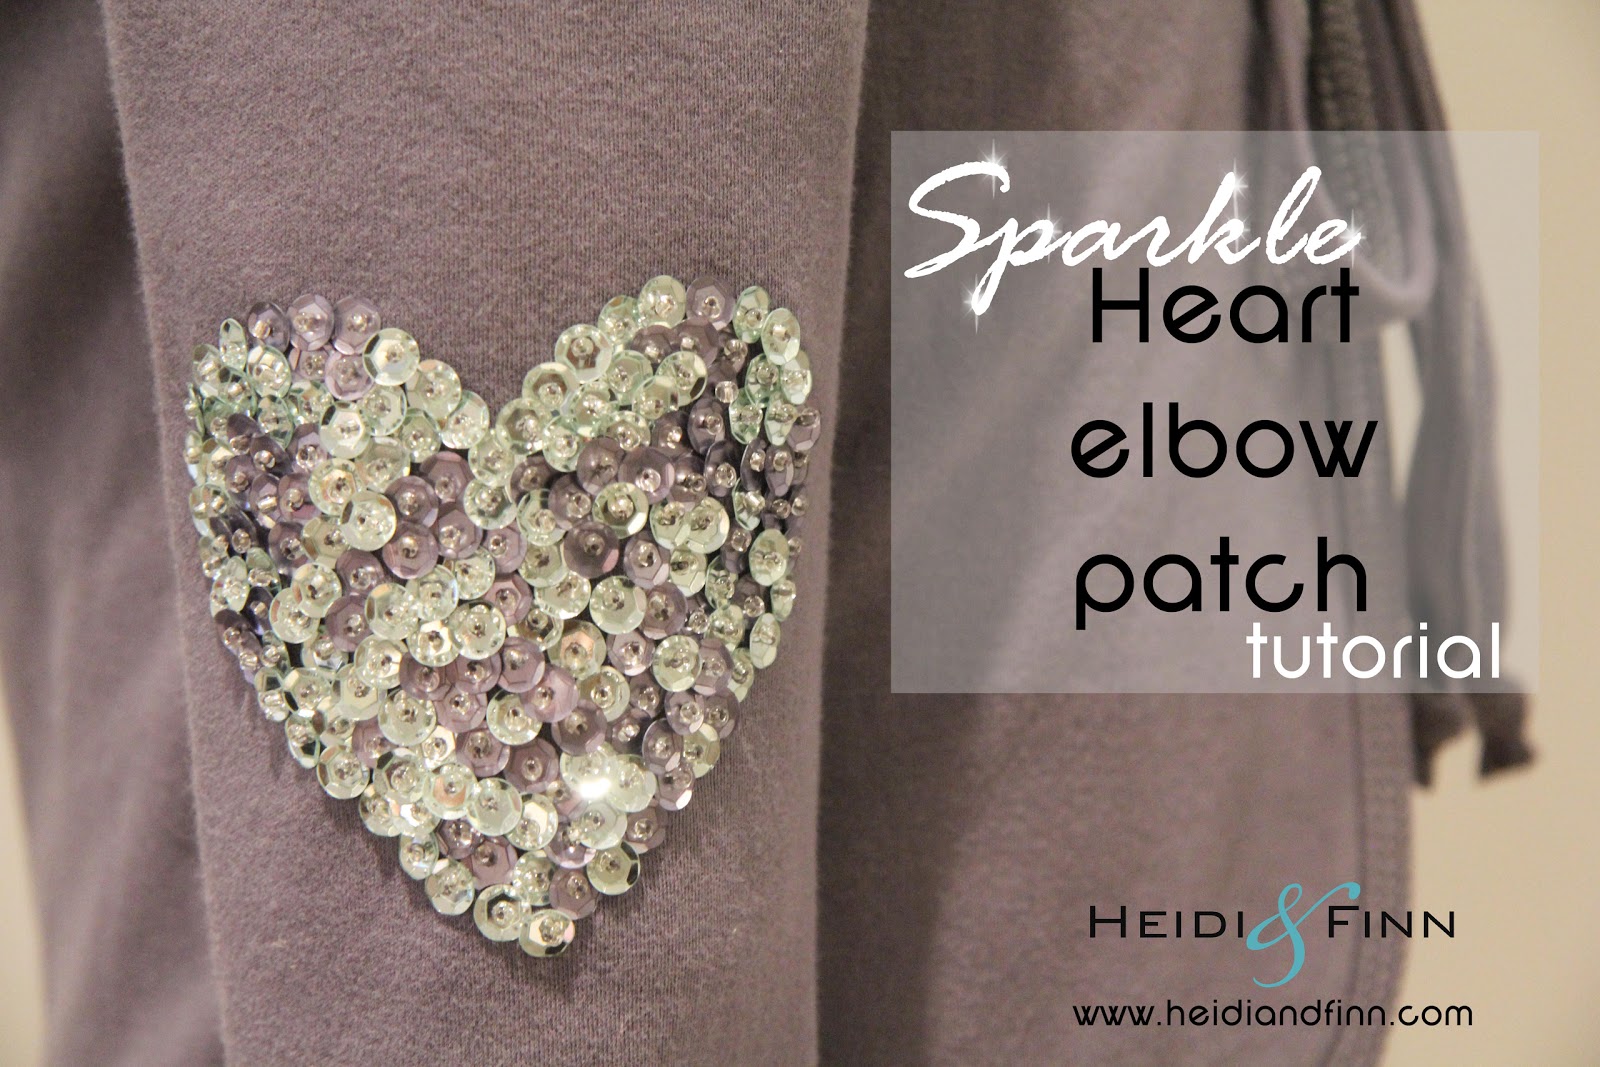 http://www.heidiandfinn.com/2014/01/sequin-heart-elbow-patch-tutorial.html